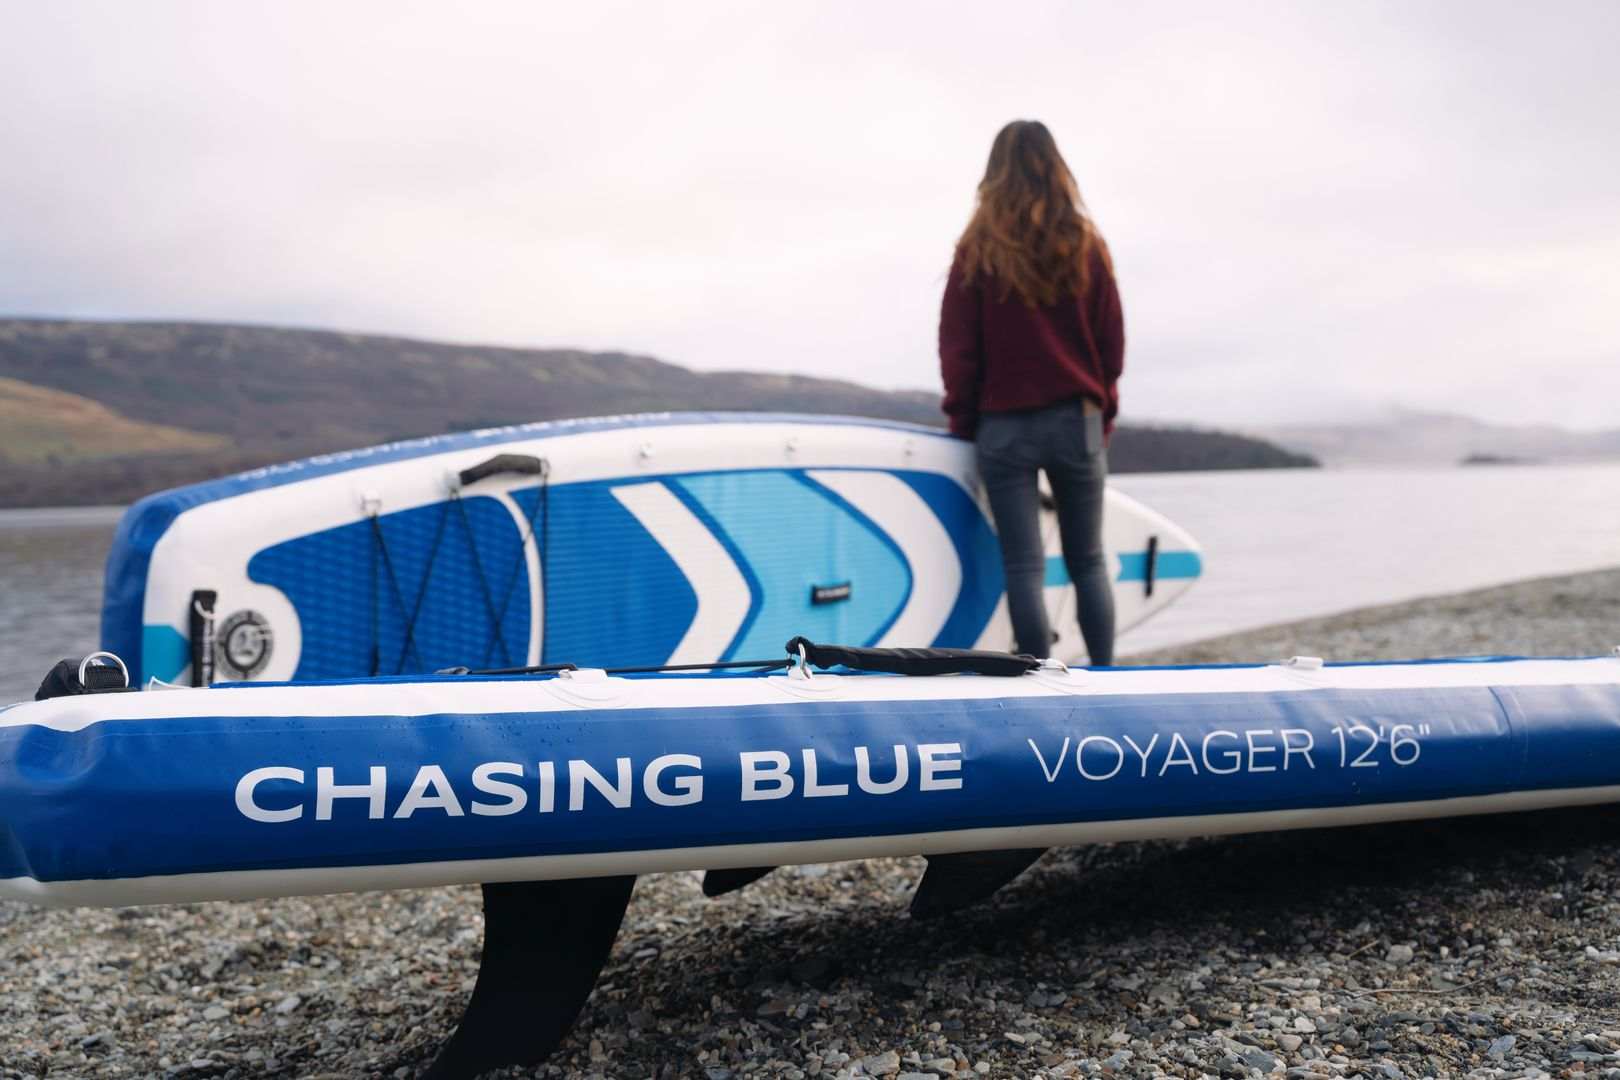 beginner paddle board chasing blue